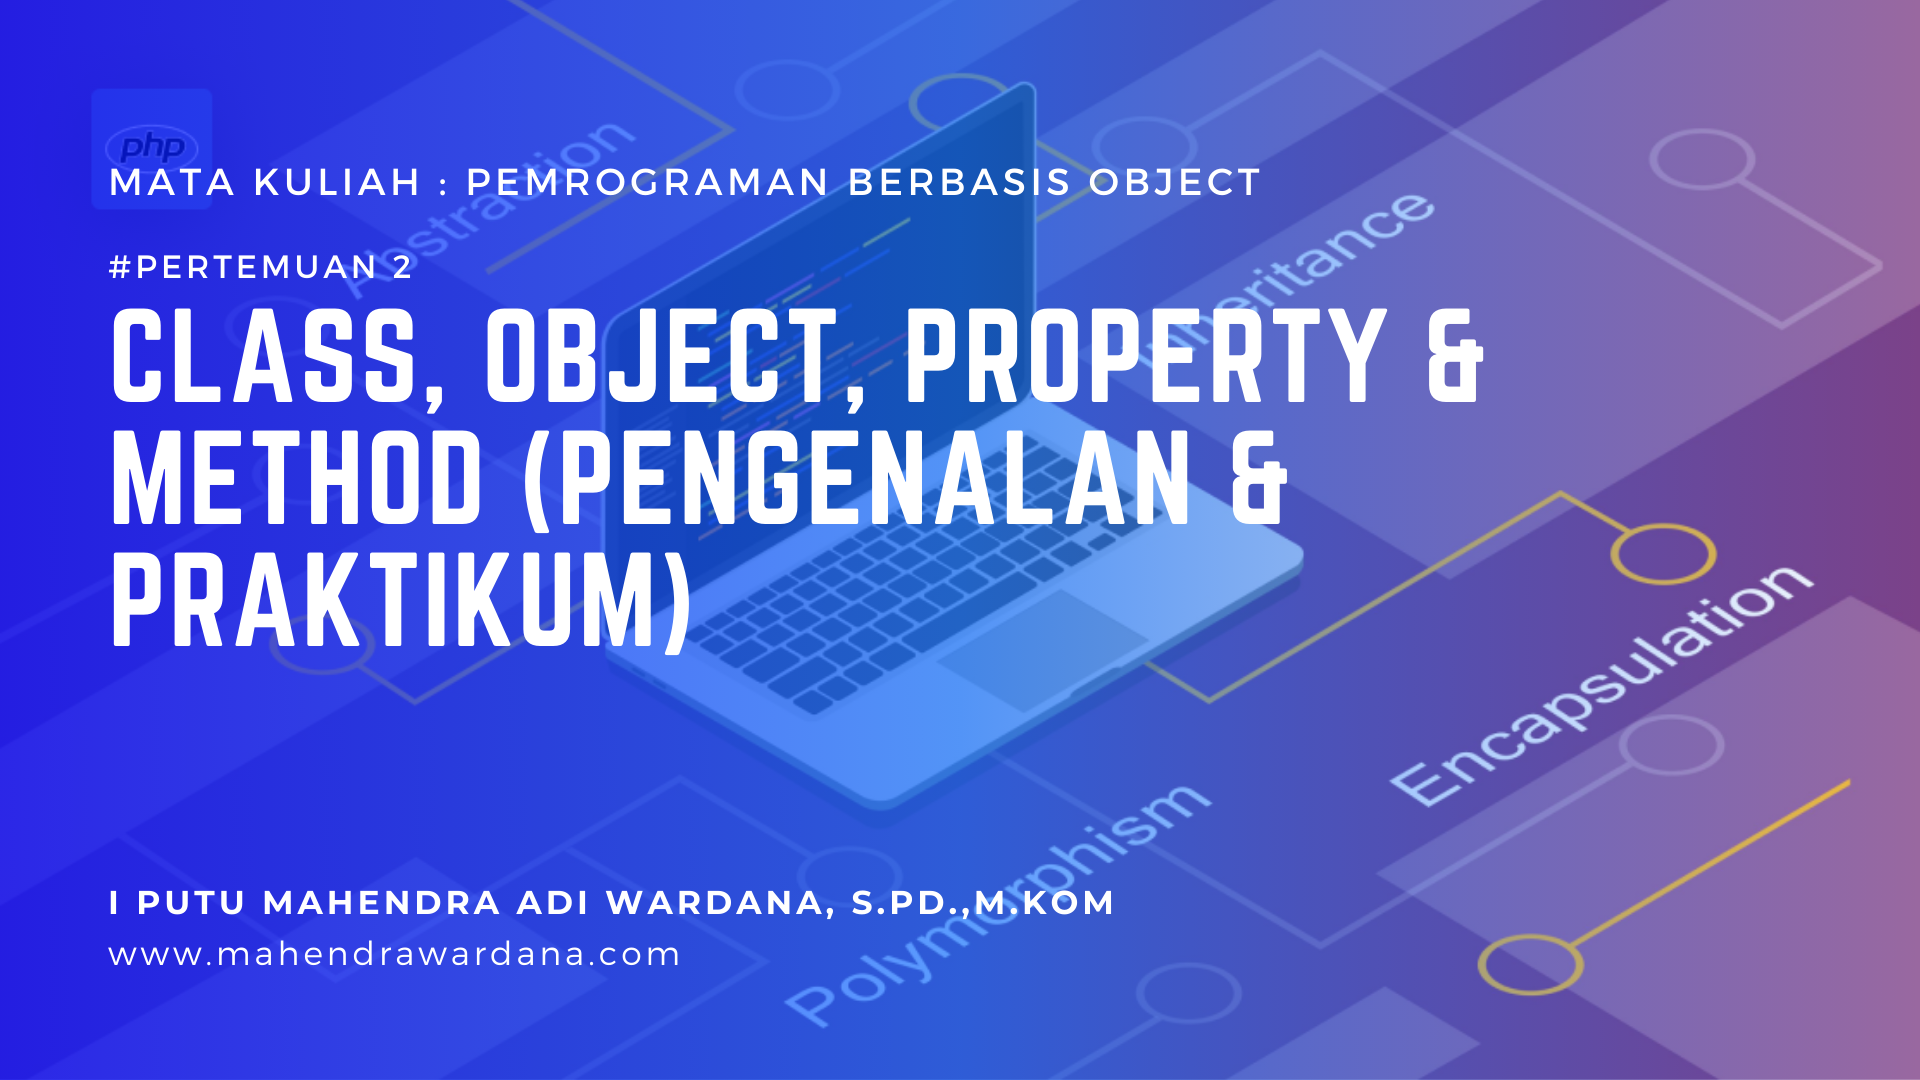 Pertemuan 2 - Class, Object, Property & Method (Pengenalan & Praktikum)